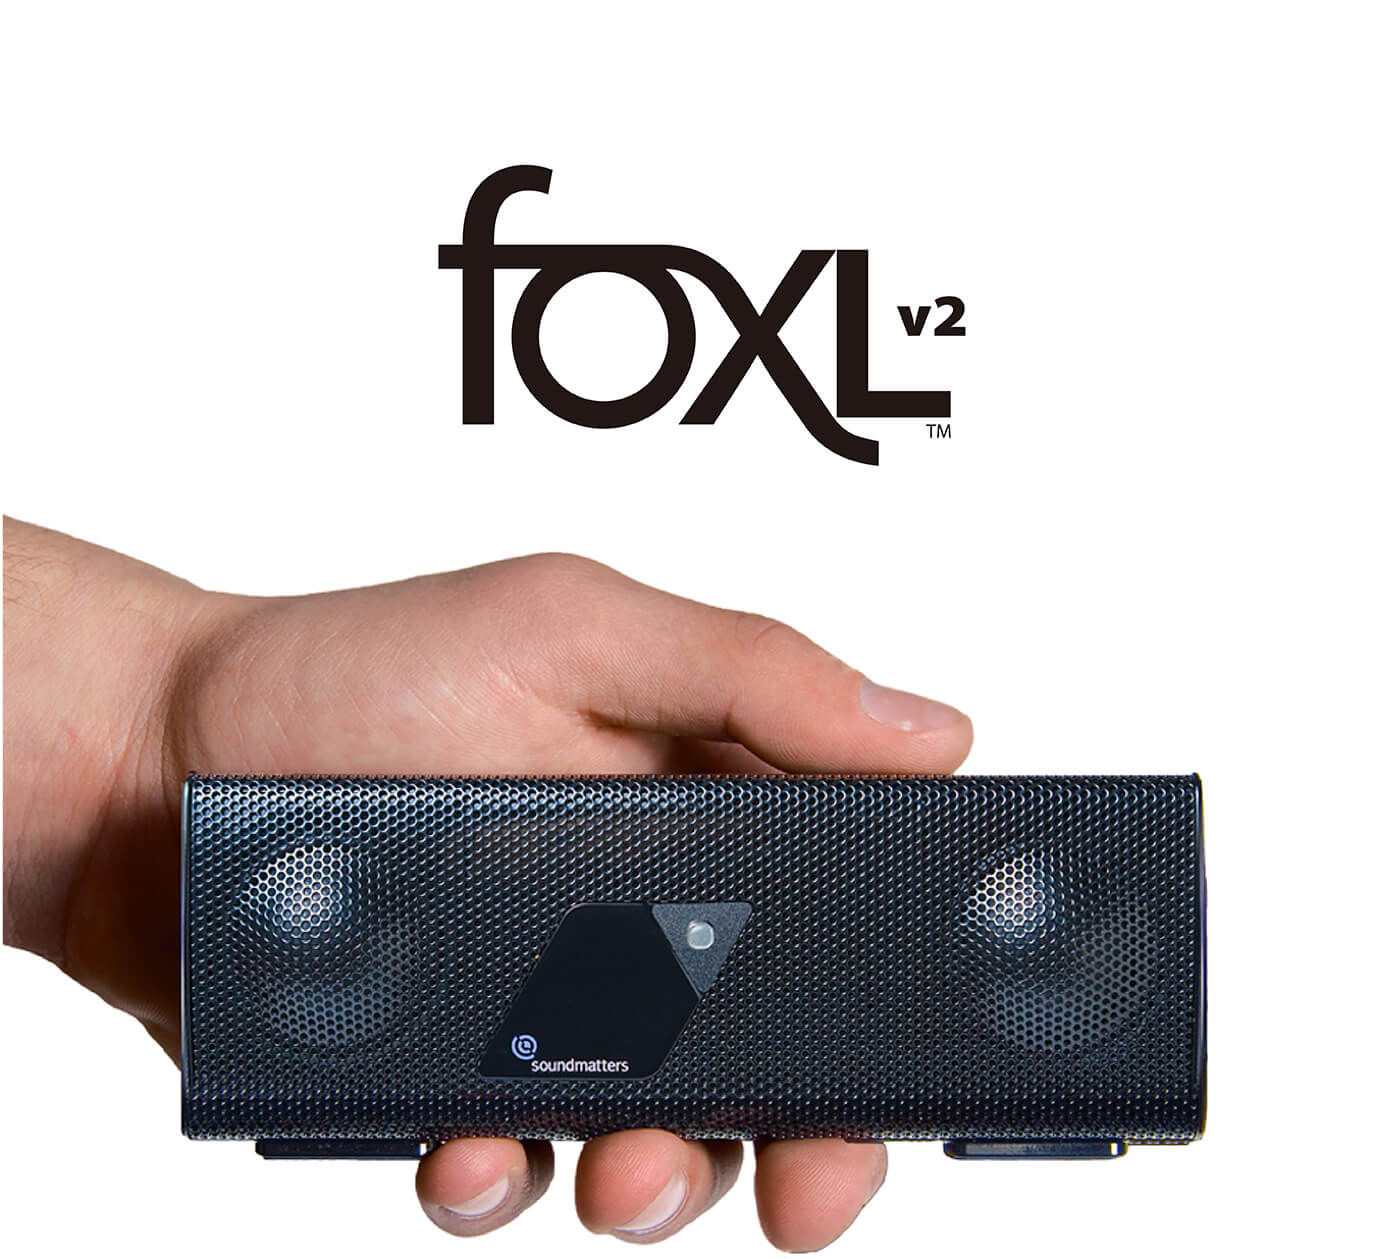 Soundmatters FoxL V2 可攜式藍牙立體音響高音質保真，輕小的體積/透過音源線連接各種音樂